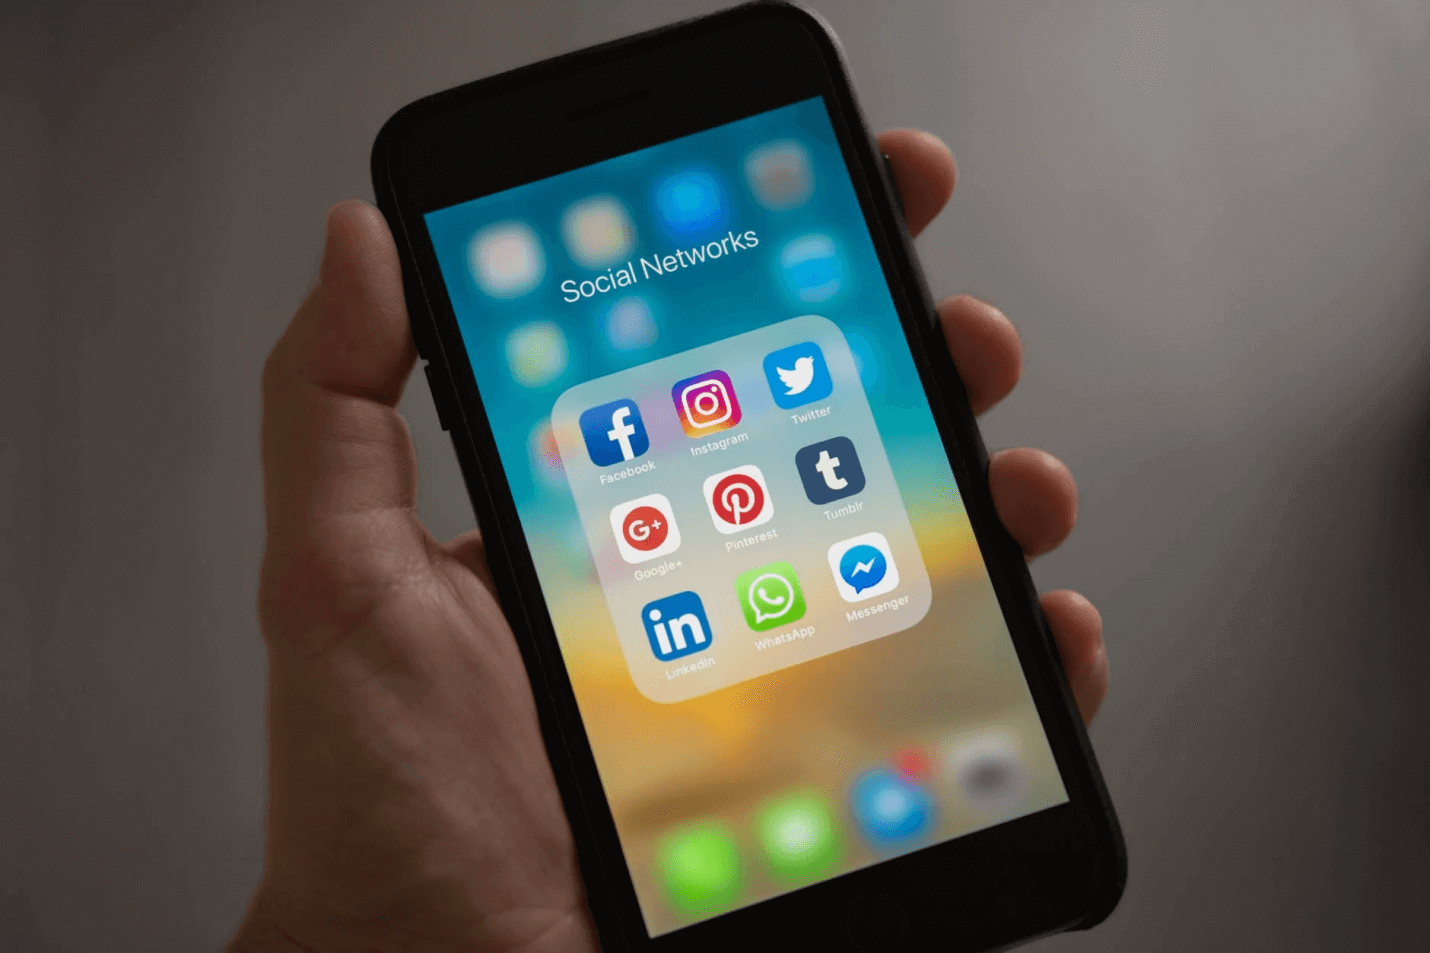 monetizing a newspaper mobile app via social networks